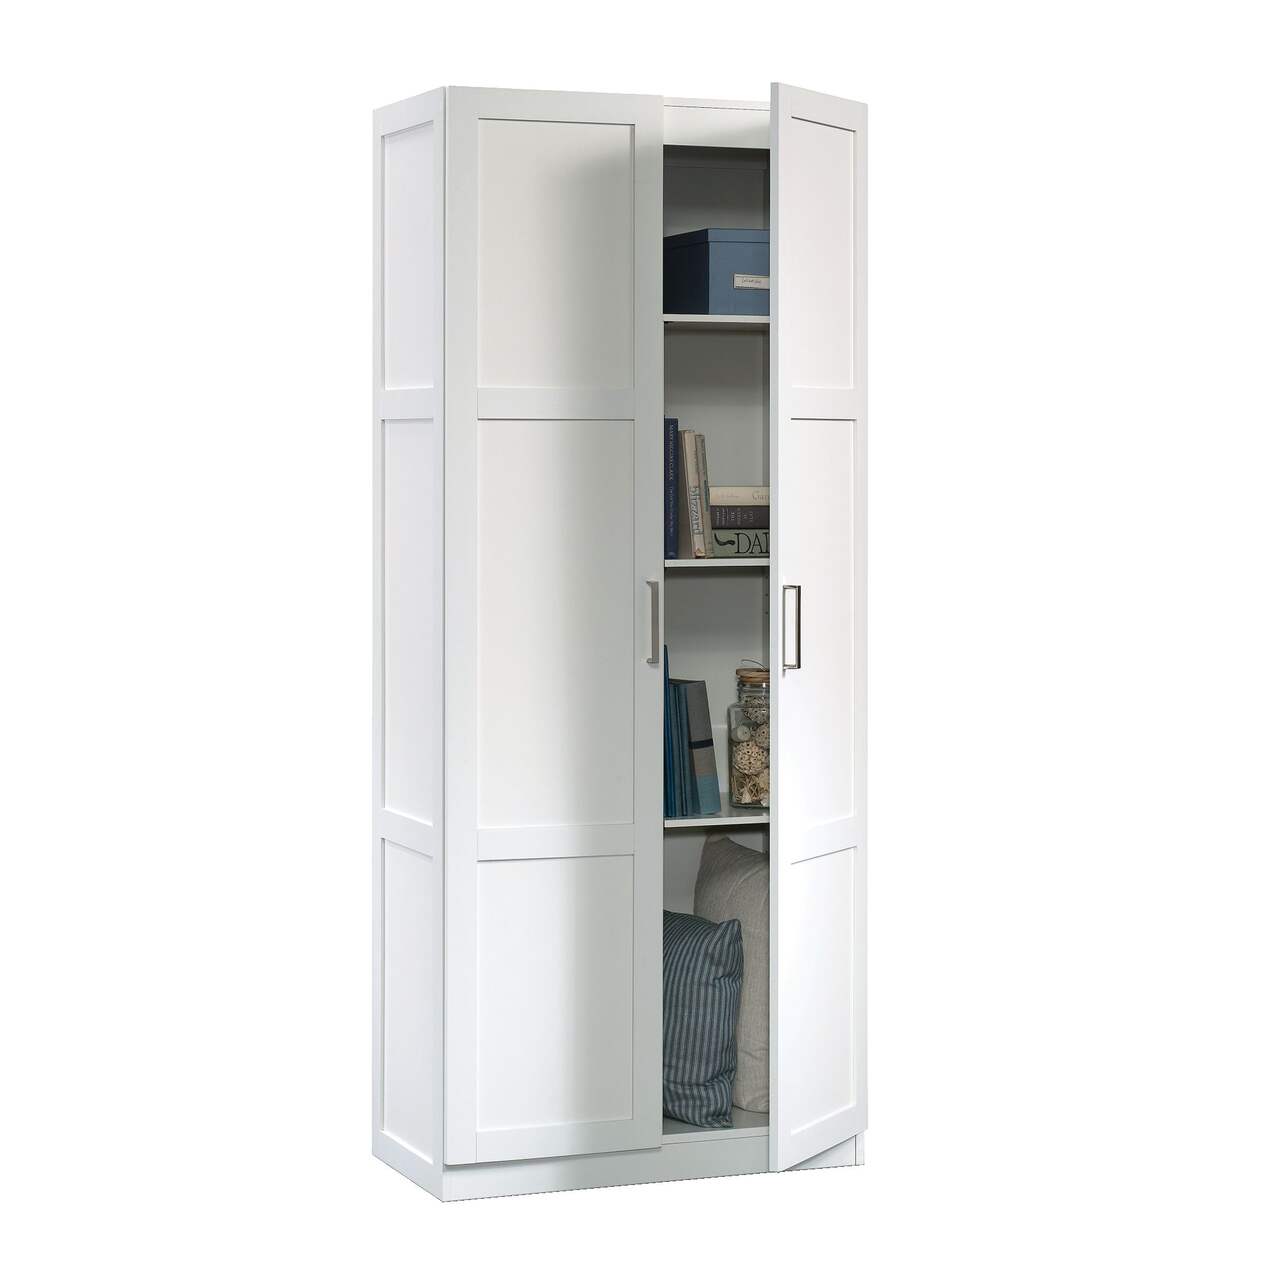 Sauder Sauder Select 260101098 Two-Door Storage Cabinet in Pine Finish, Schewels Home